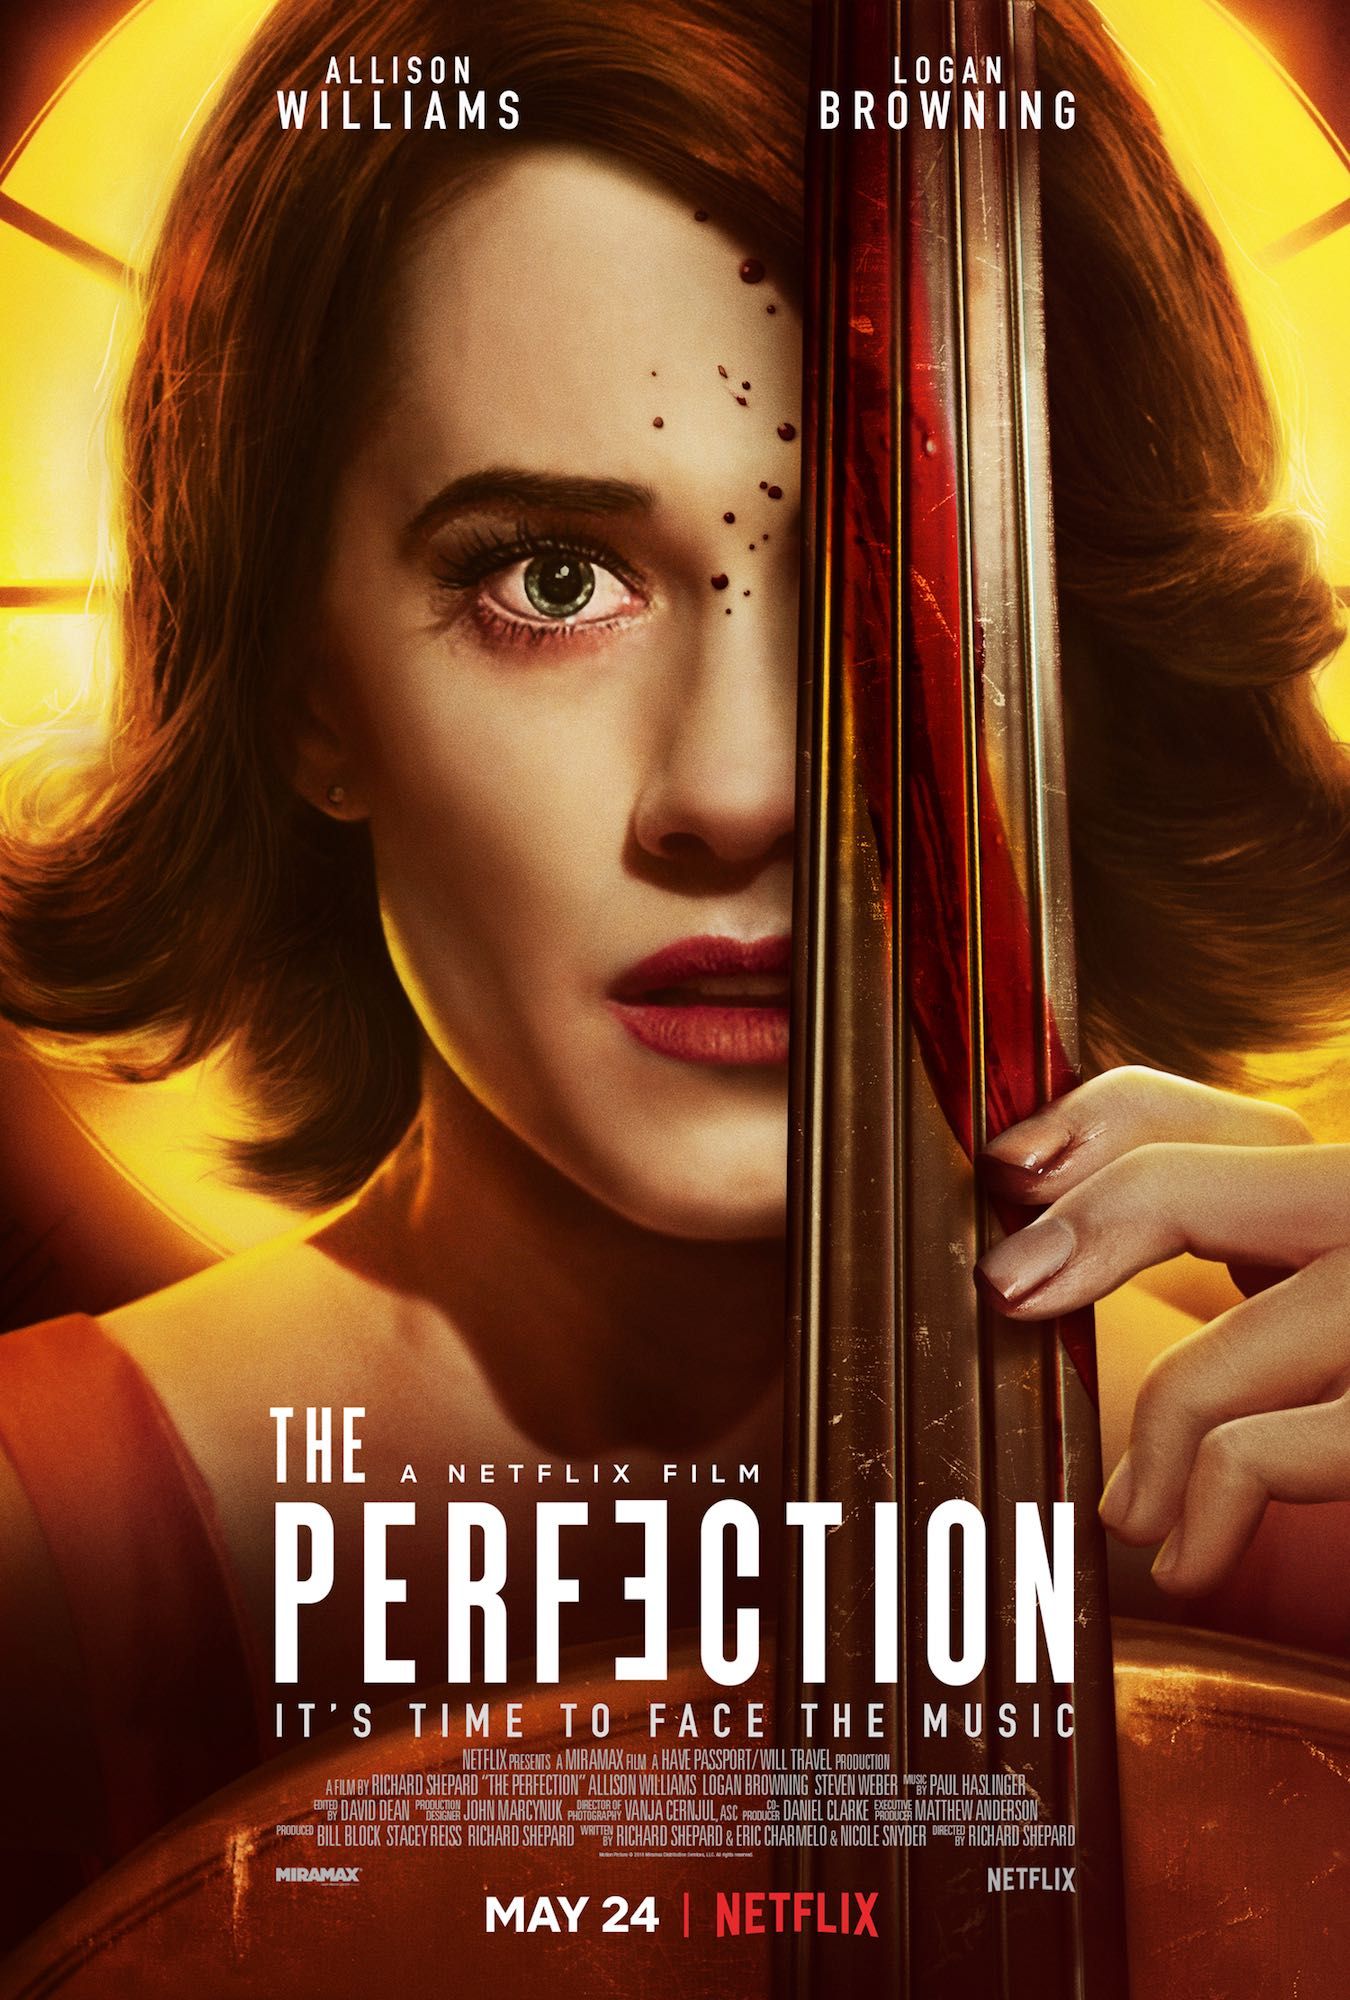 The Perfection Trailer: Netflix’s Horror Film Looks Super Creepy